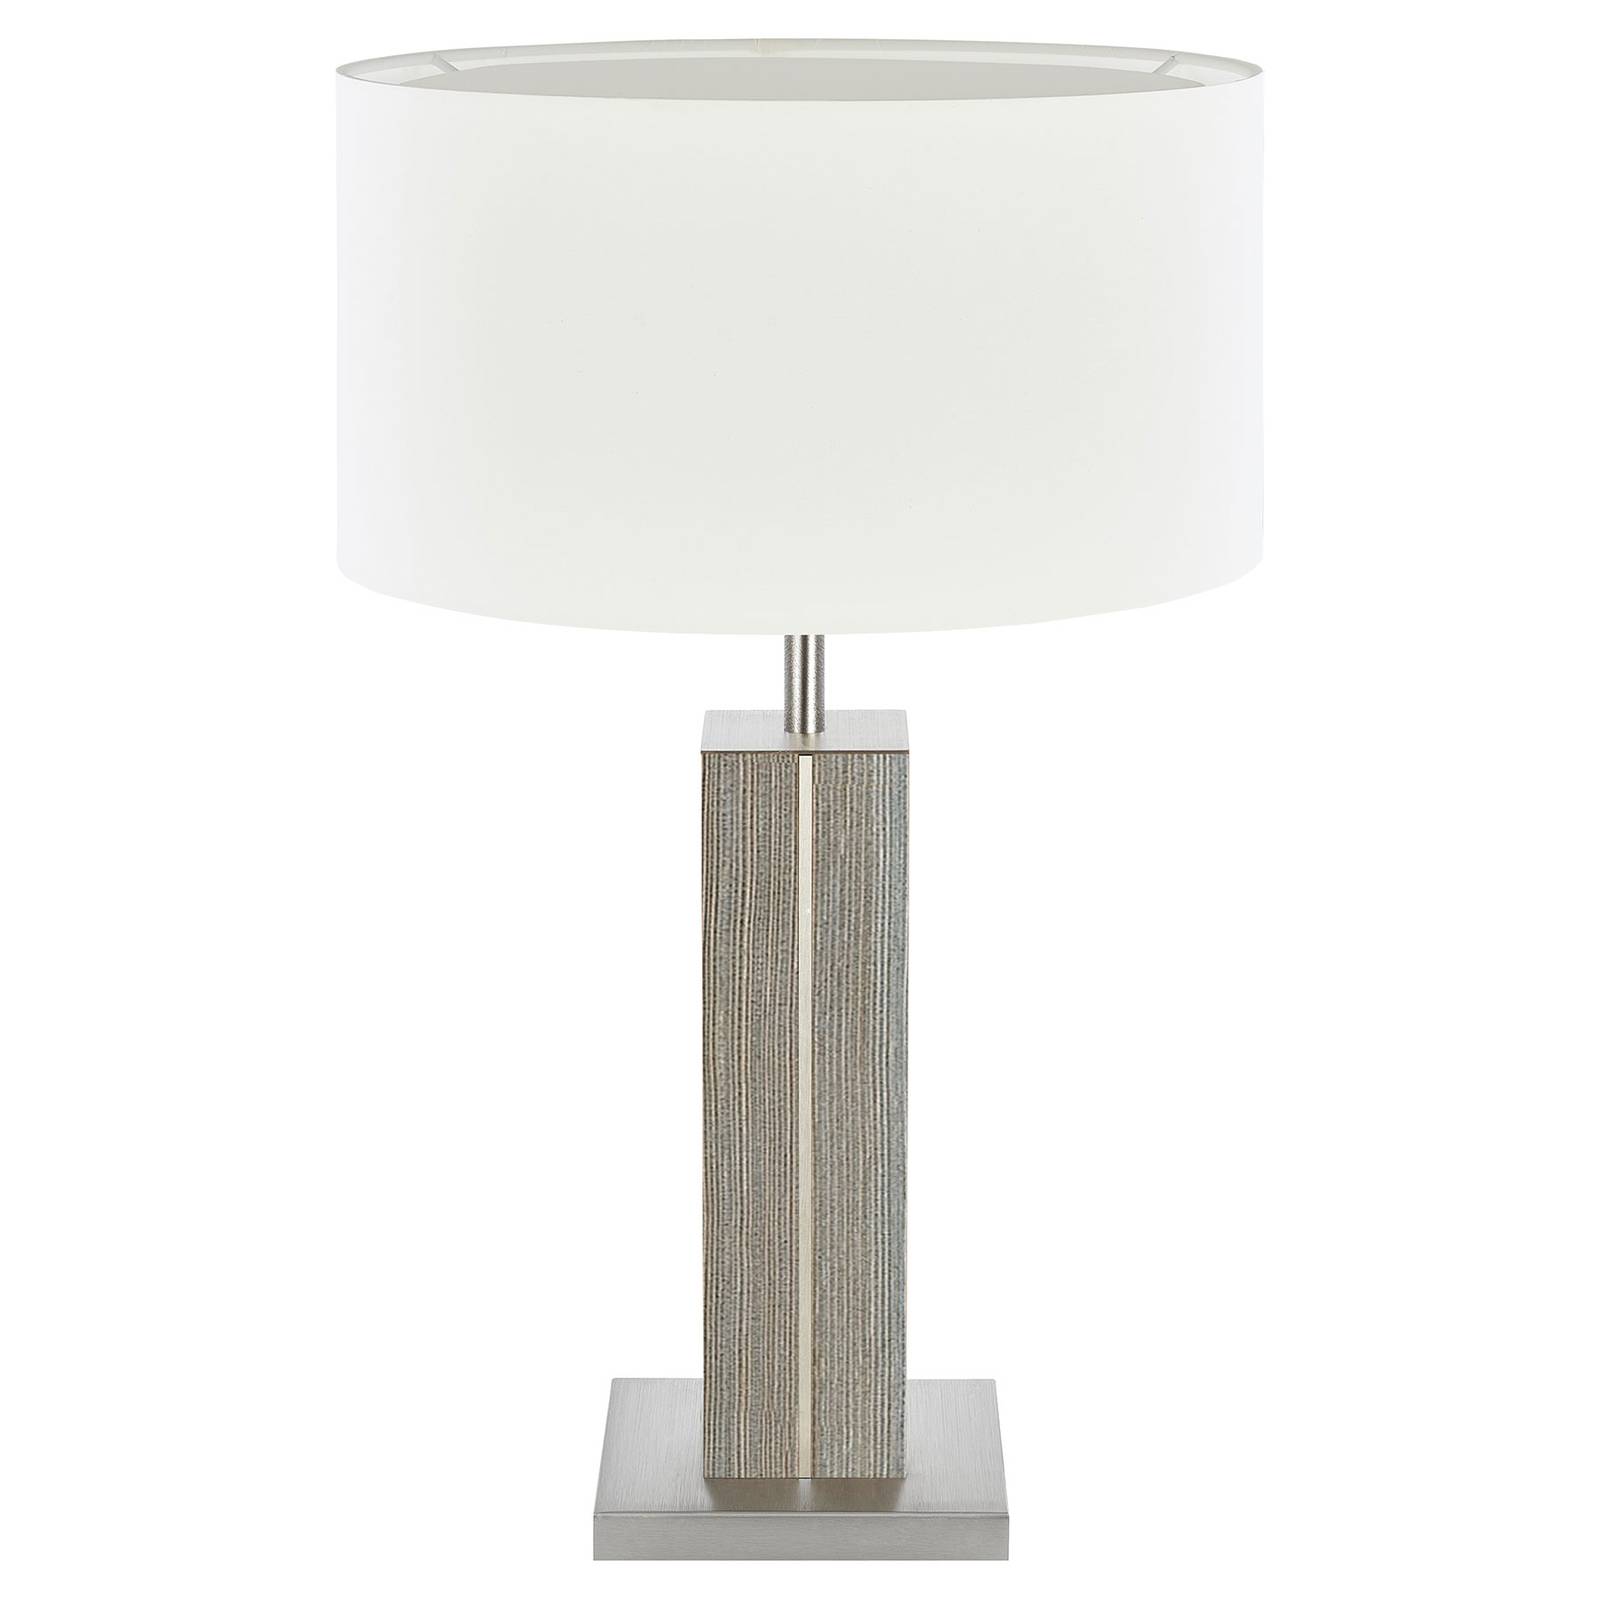 HerzBlut Dana lampe à poser, épicéa, blanc, 56 cm